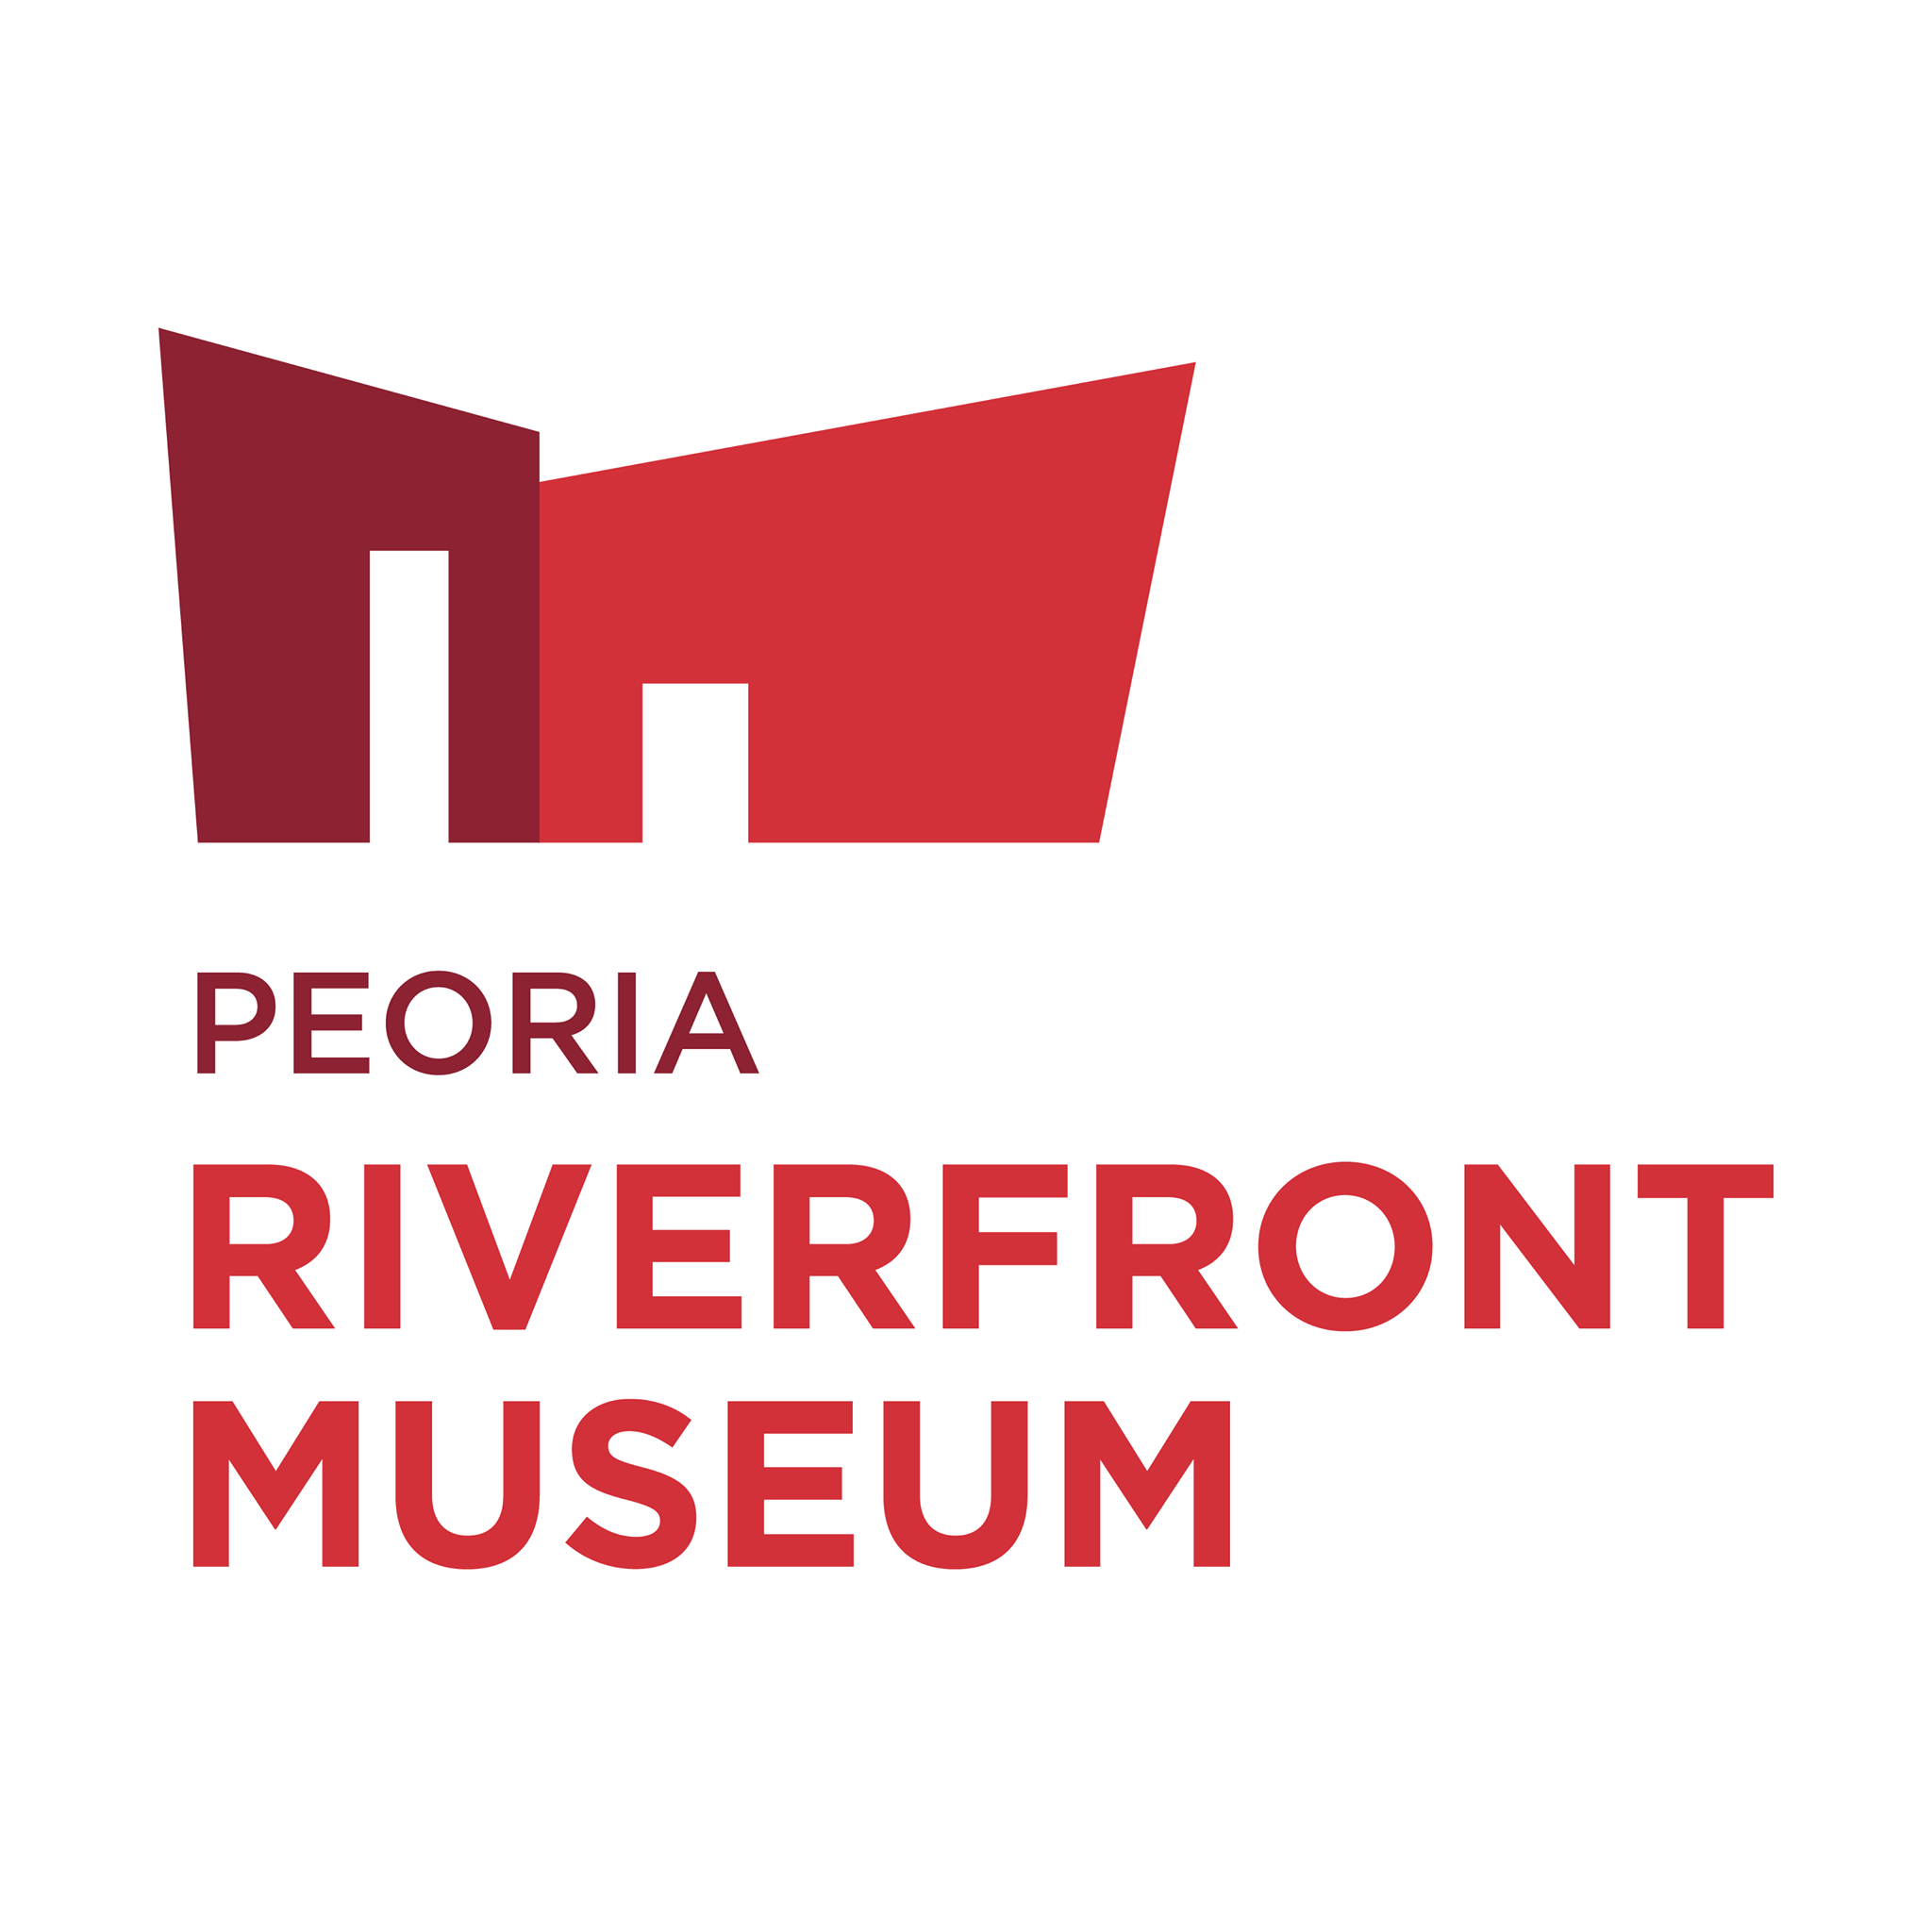 Peoria Riverfront Museum|Zoo and Wildlife Sanctuary |Travel